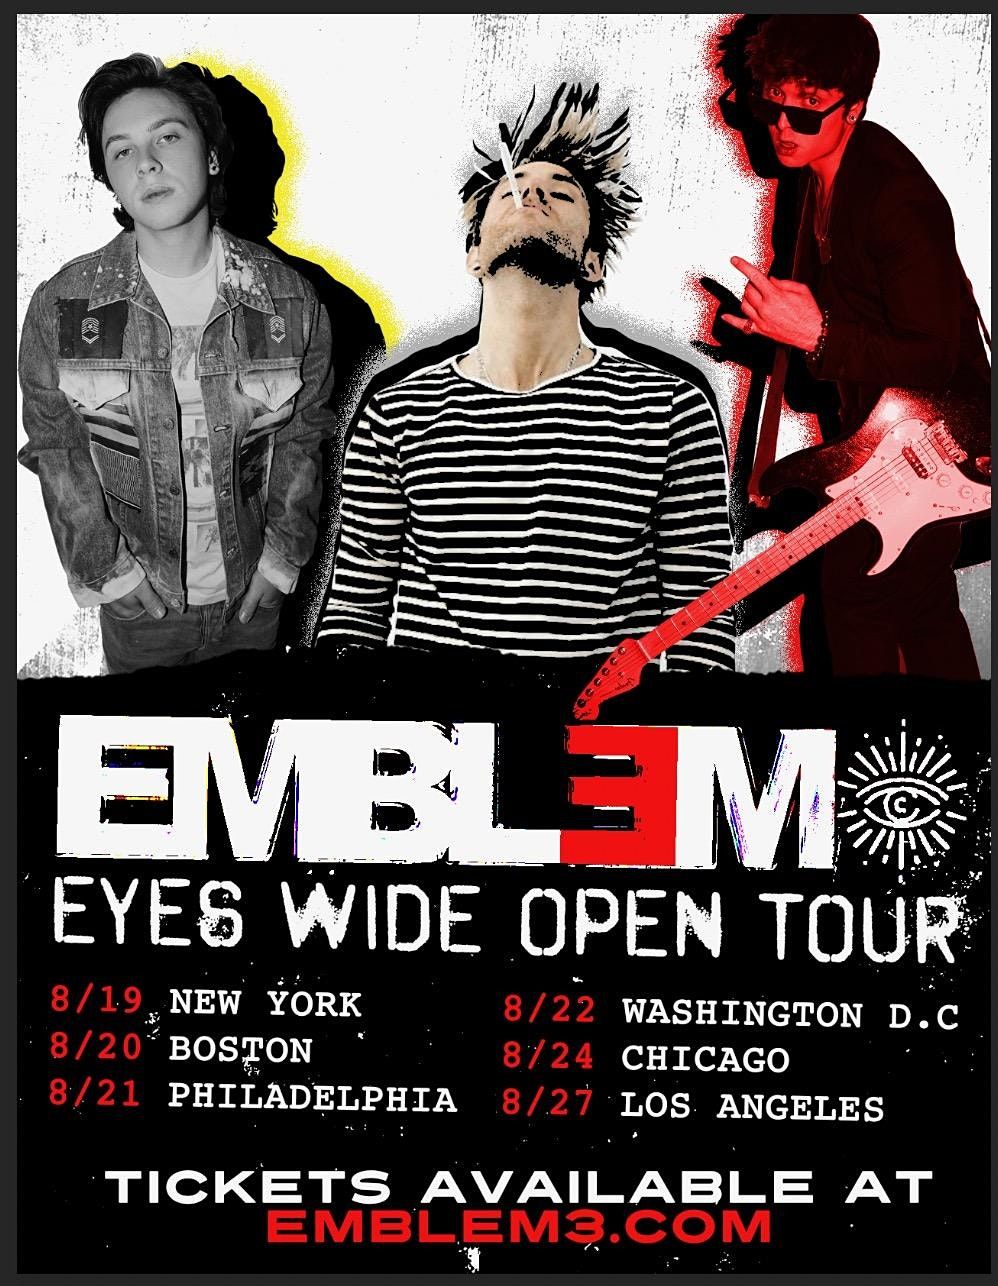 EMBLEM3 - Eyes Wide Open Tour - New York, NY